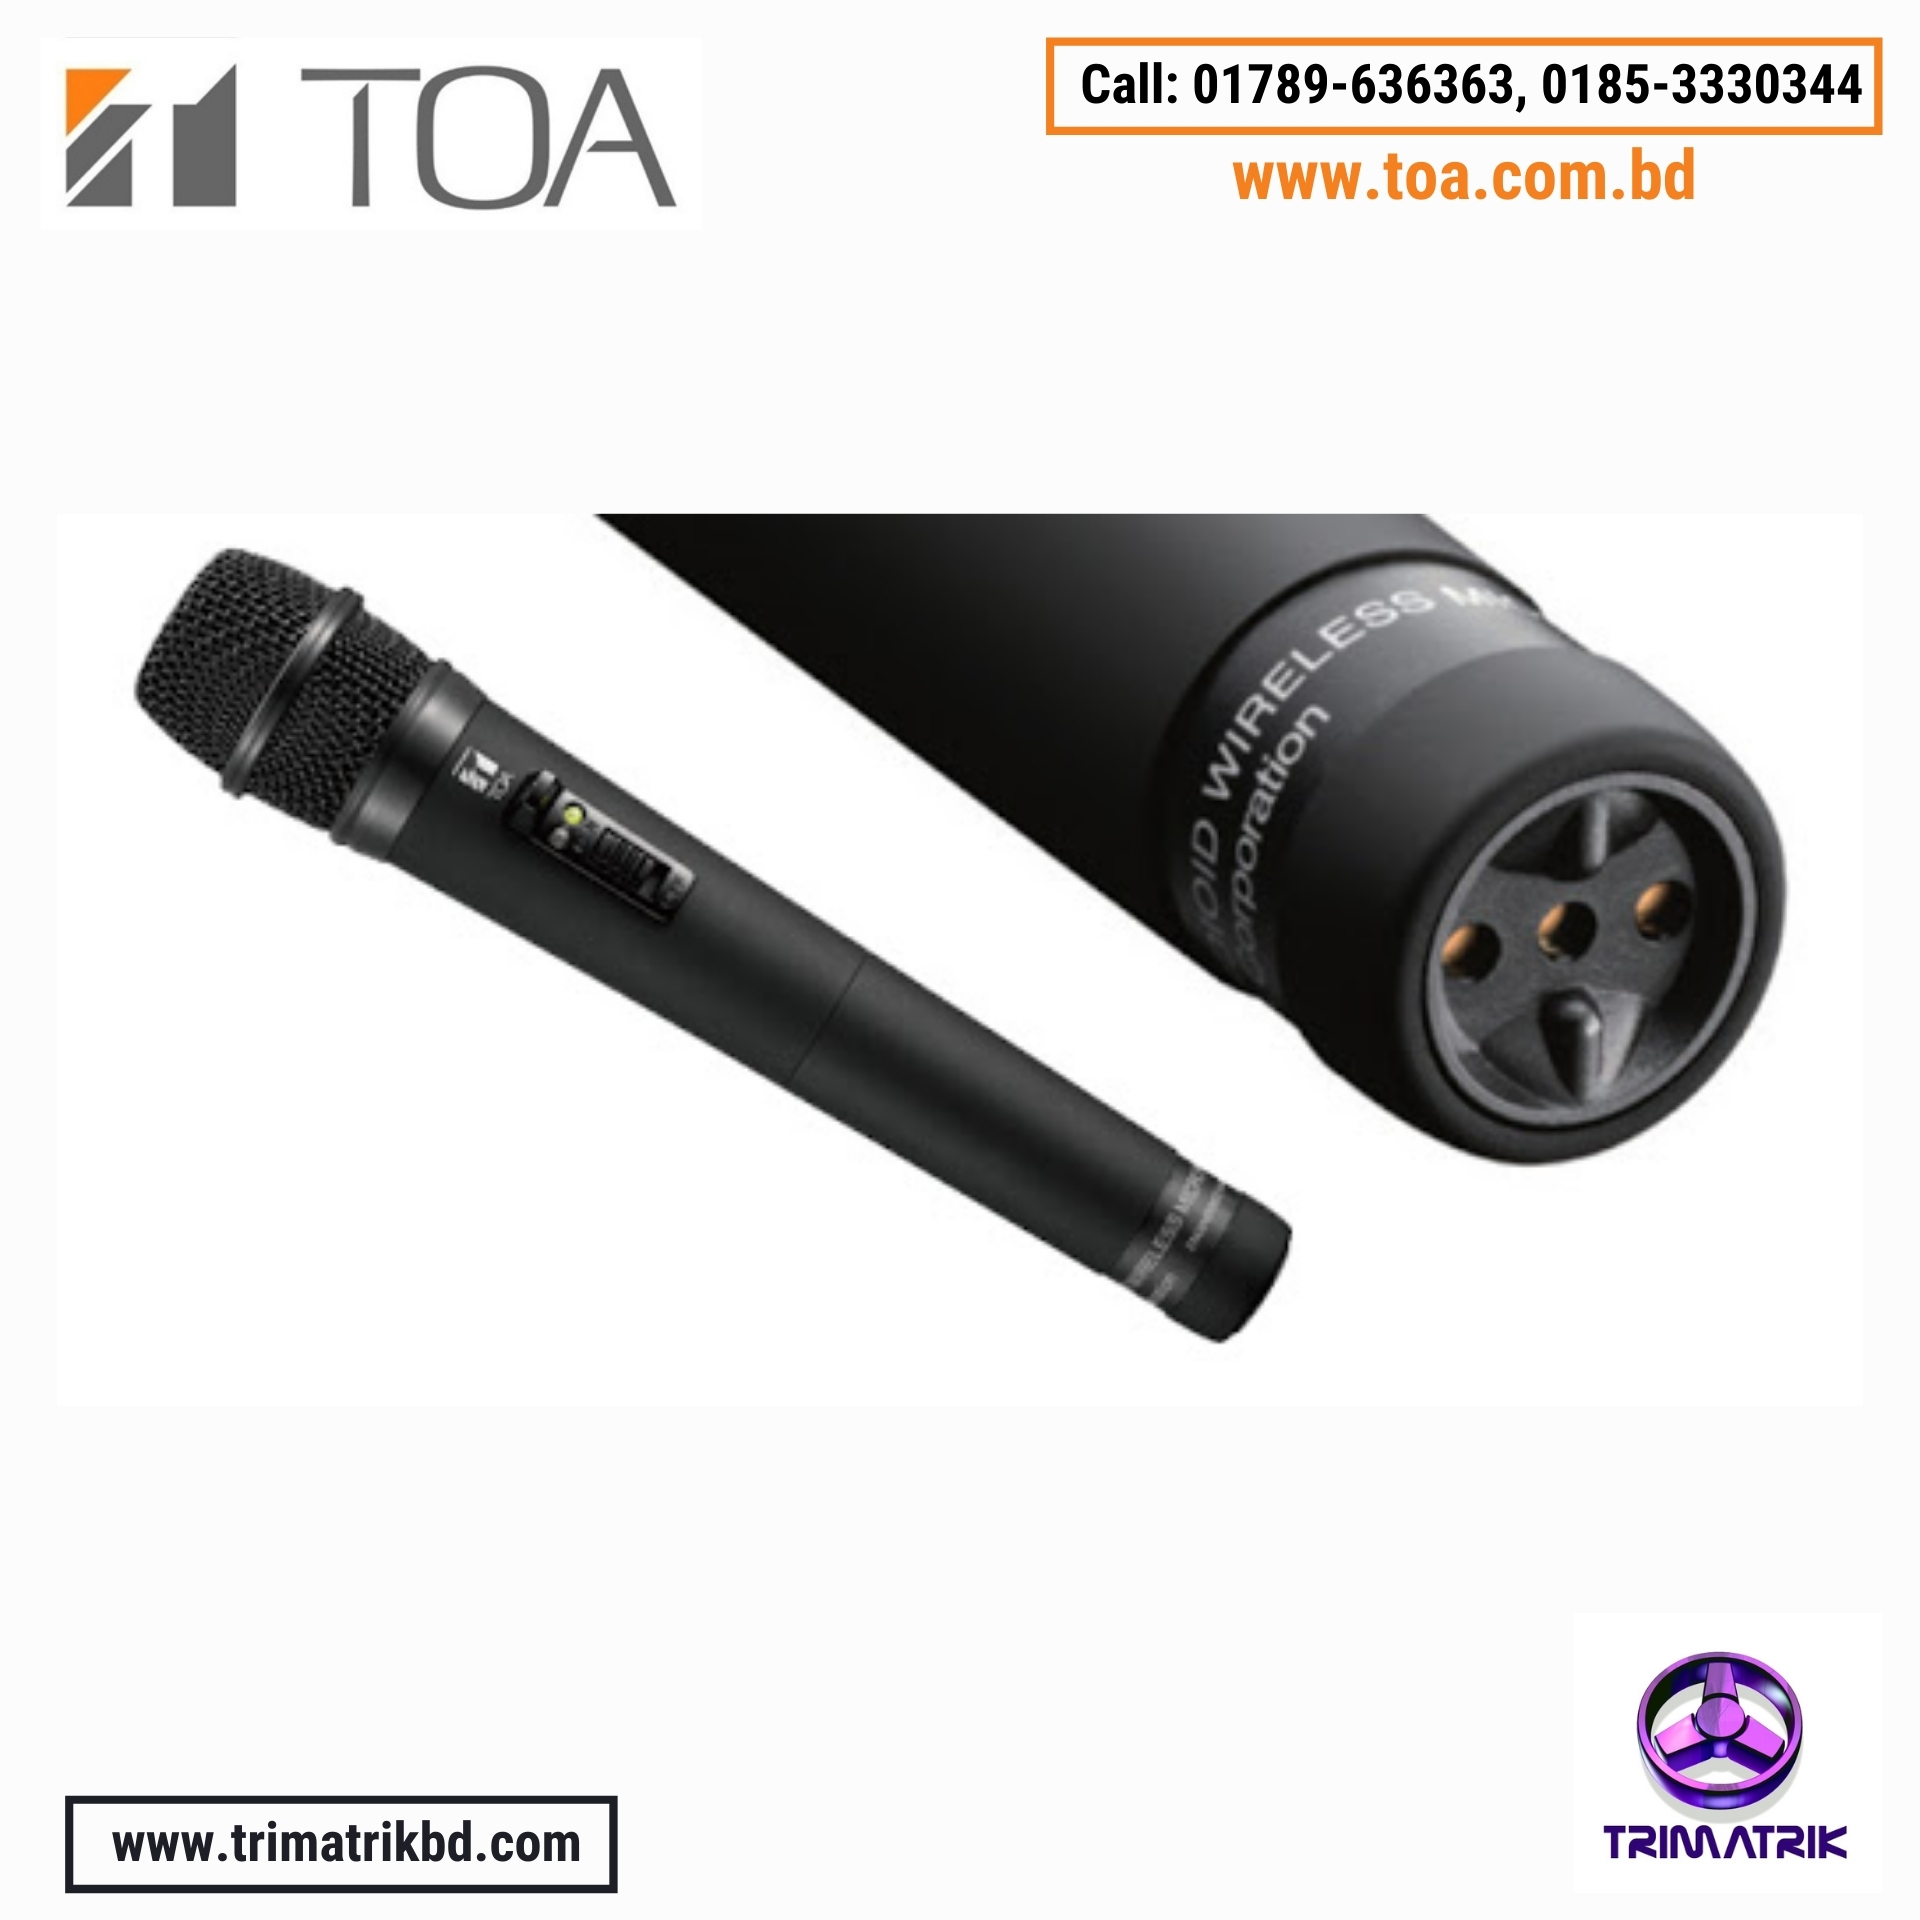 TOA WT-5810 UHF Wireless Microphone